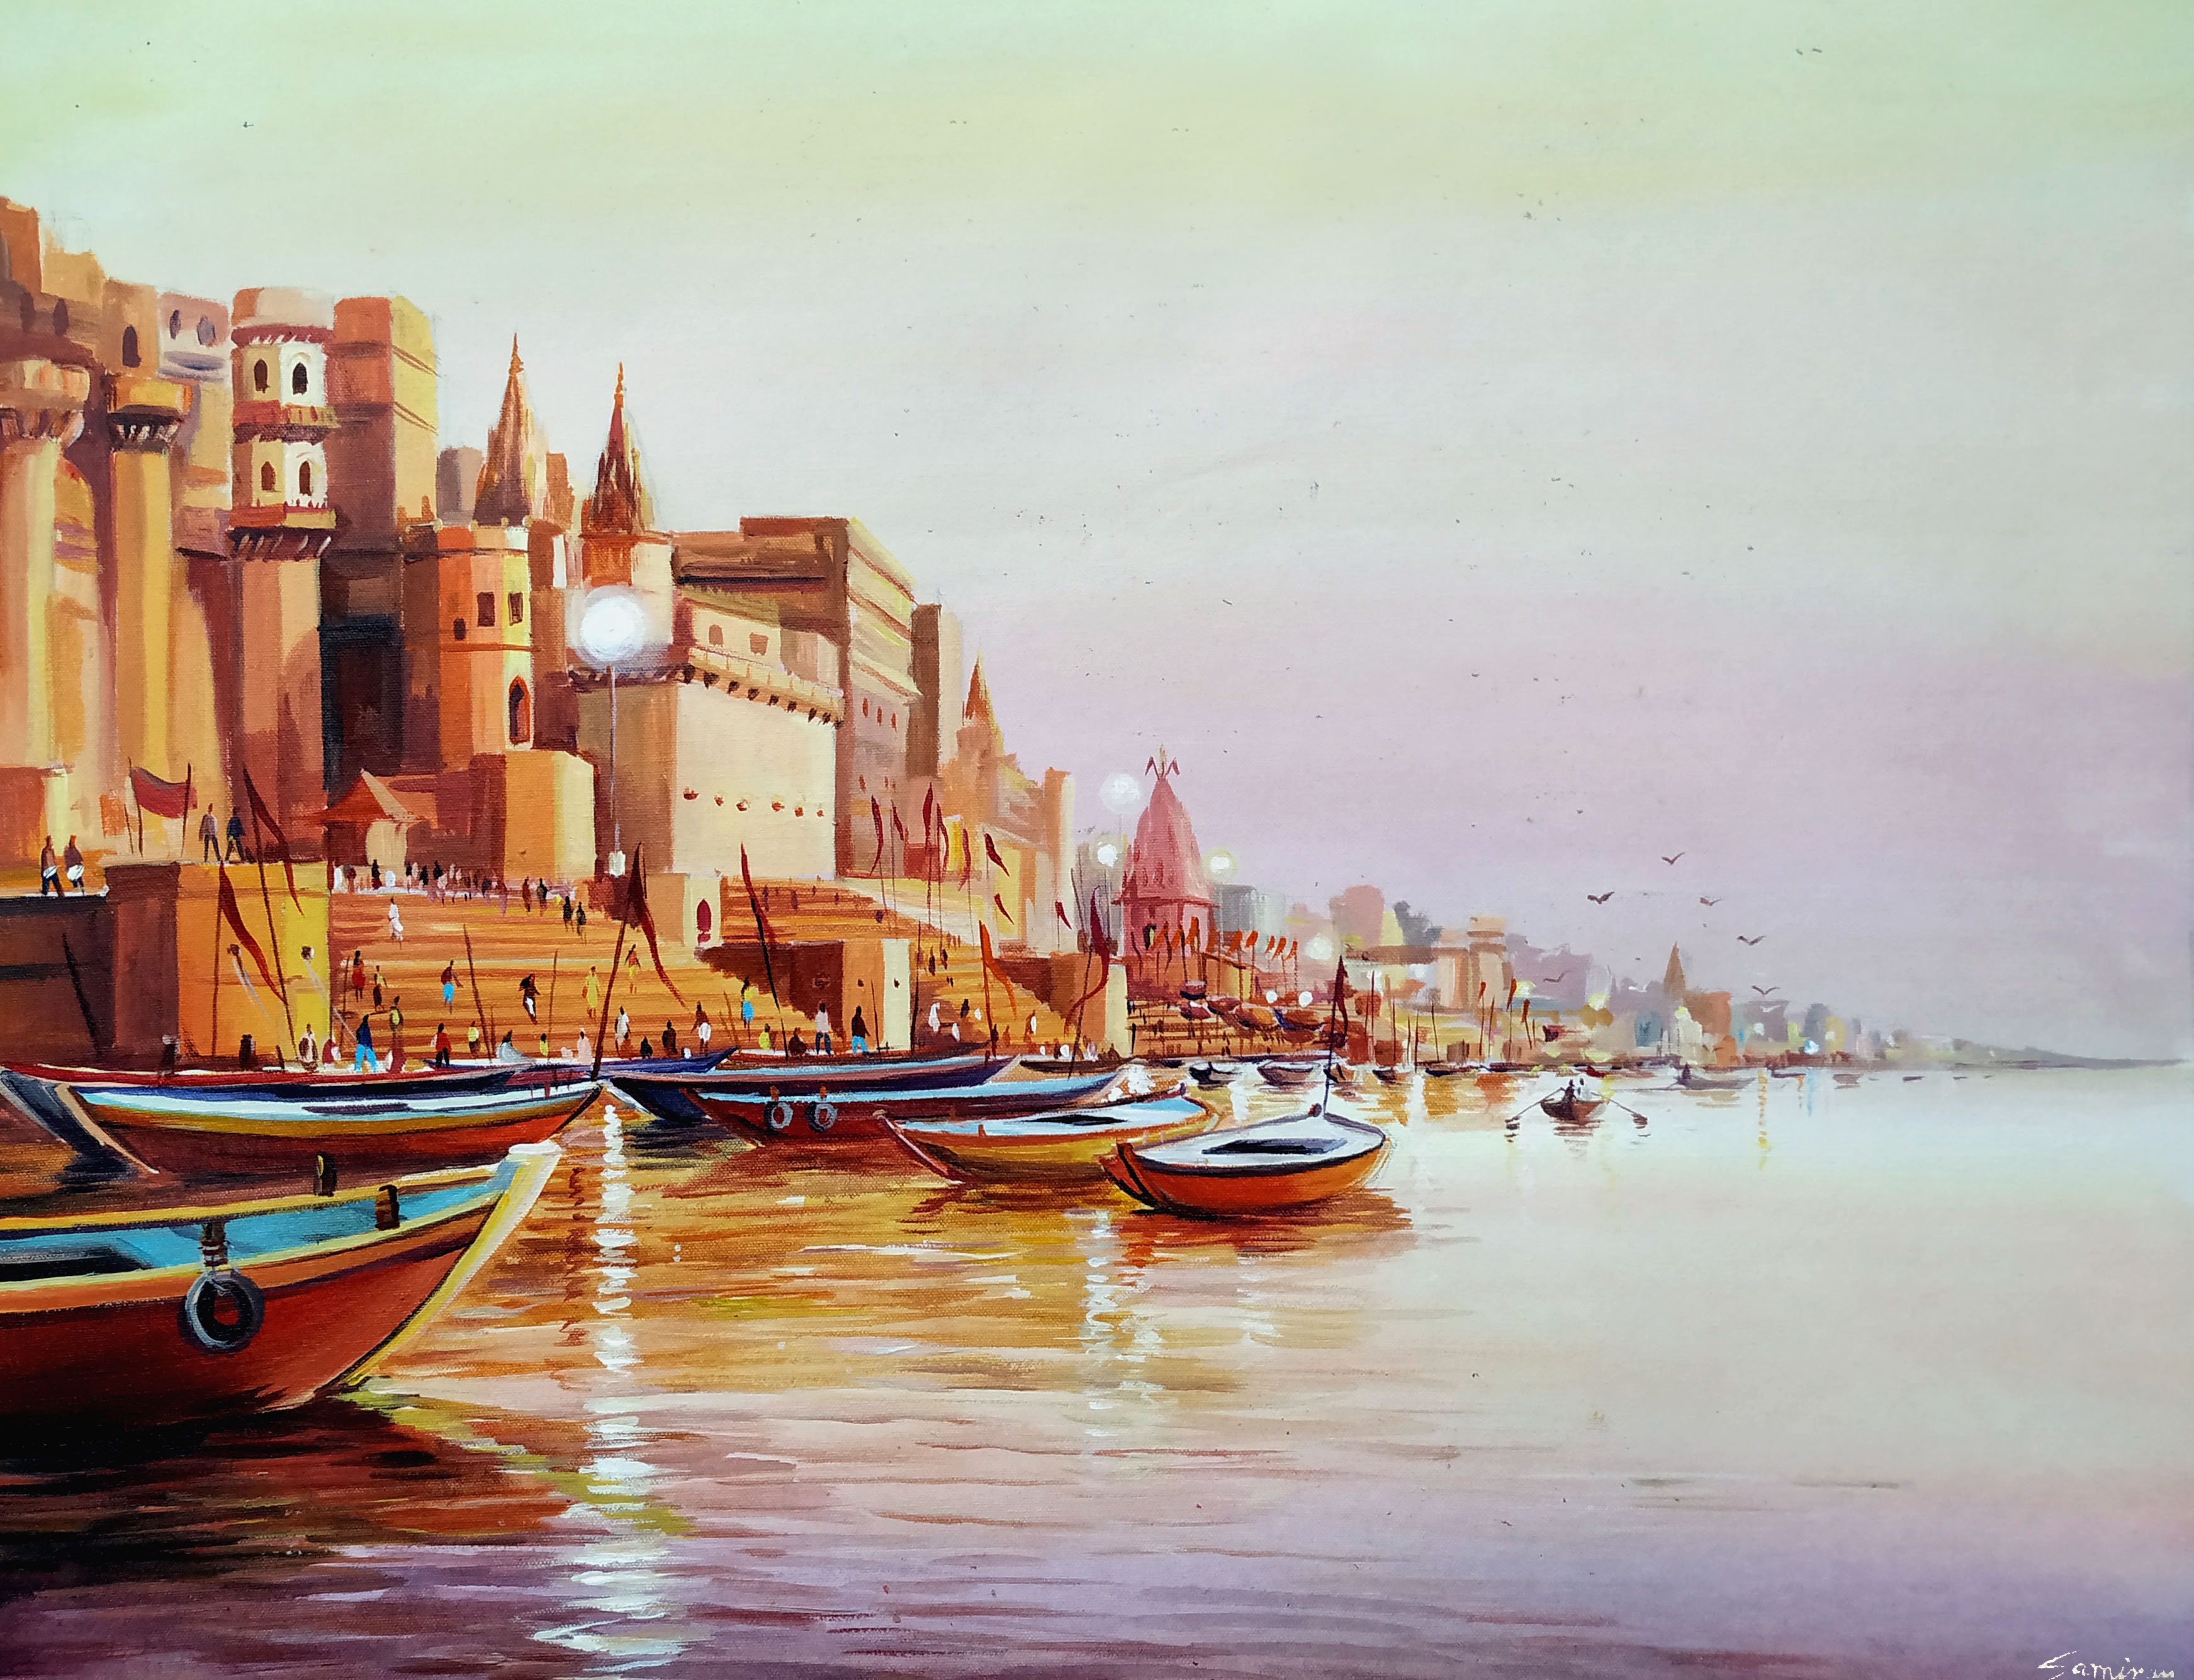 Subah Banaras Ghats Boats 17753